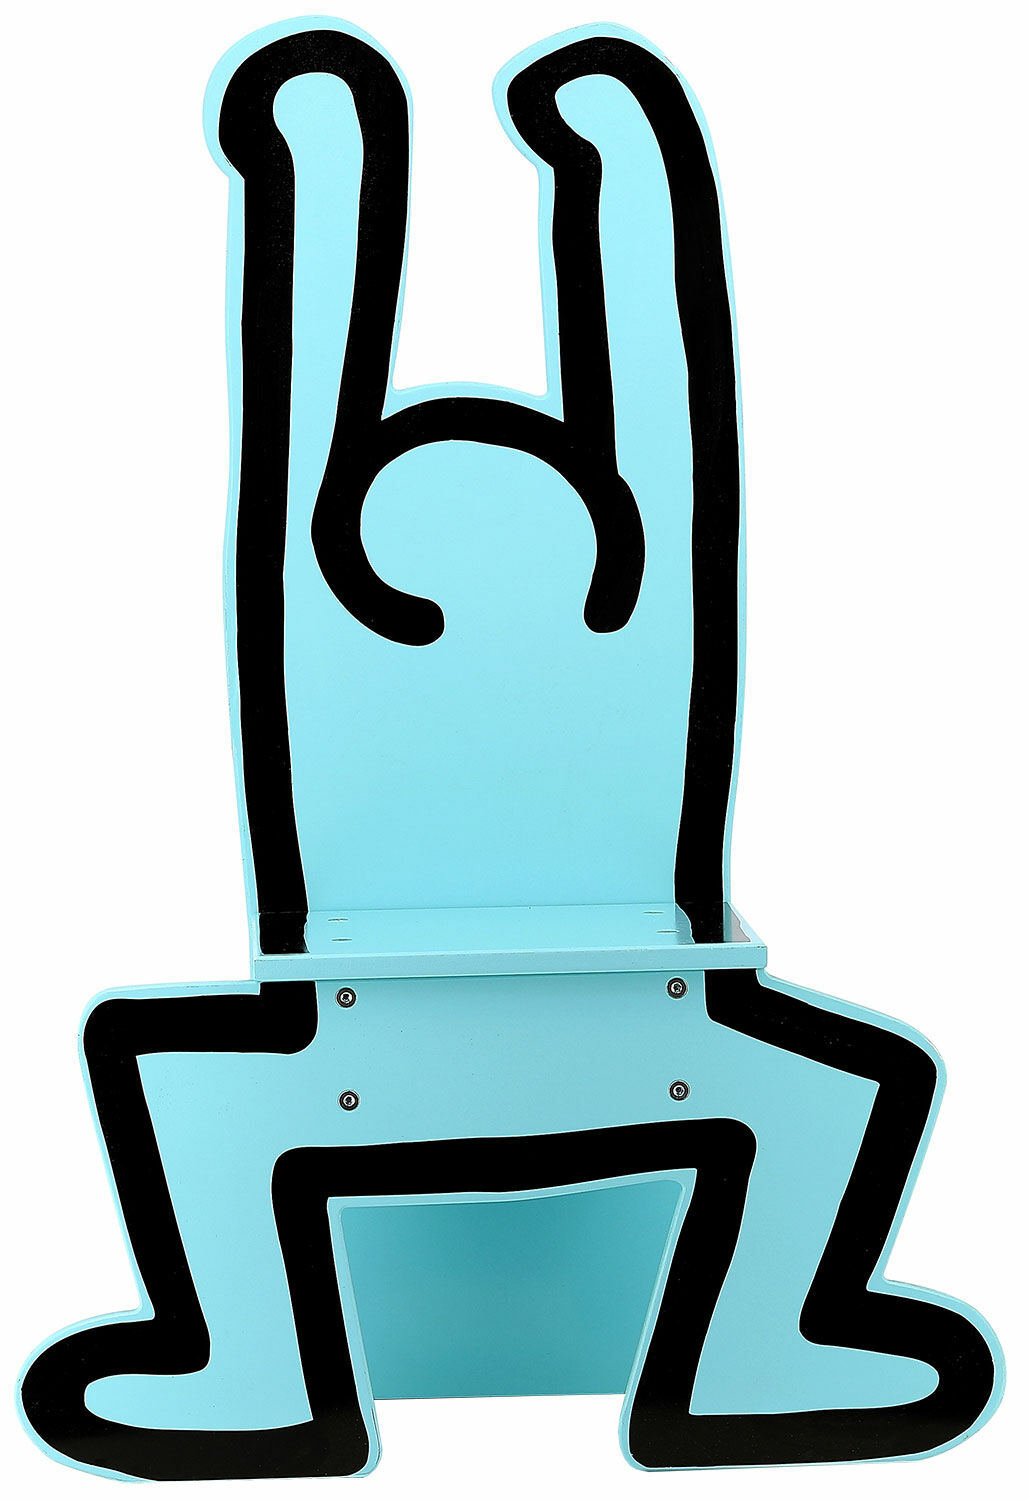 Chaise pour enfants "Keith Haring", version bleue